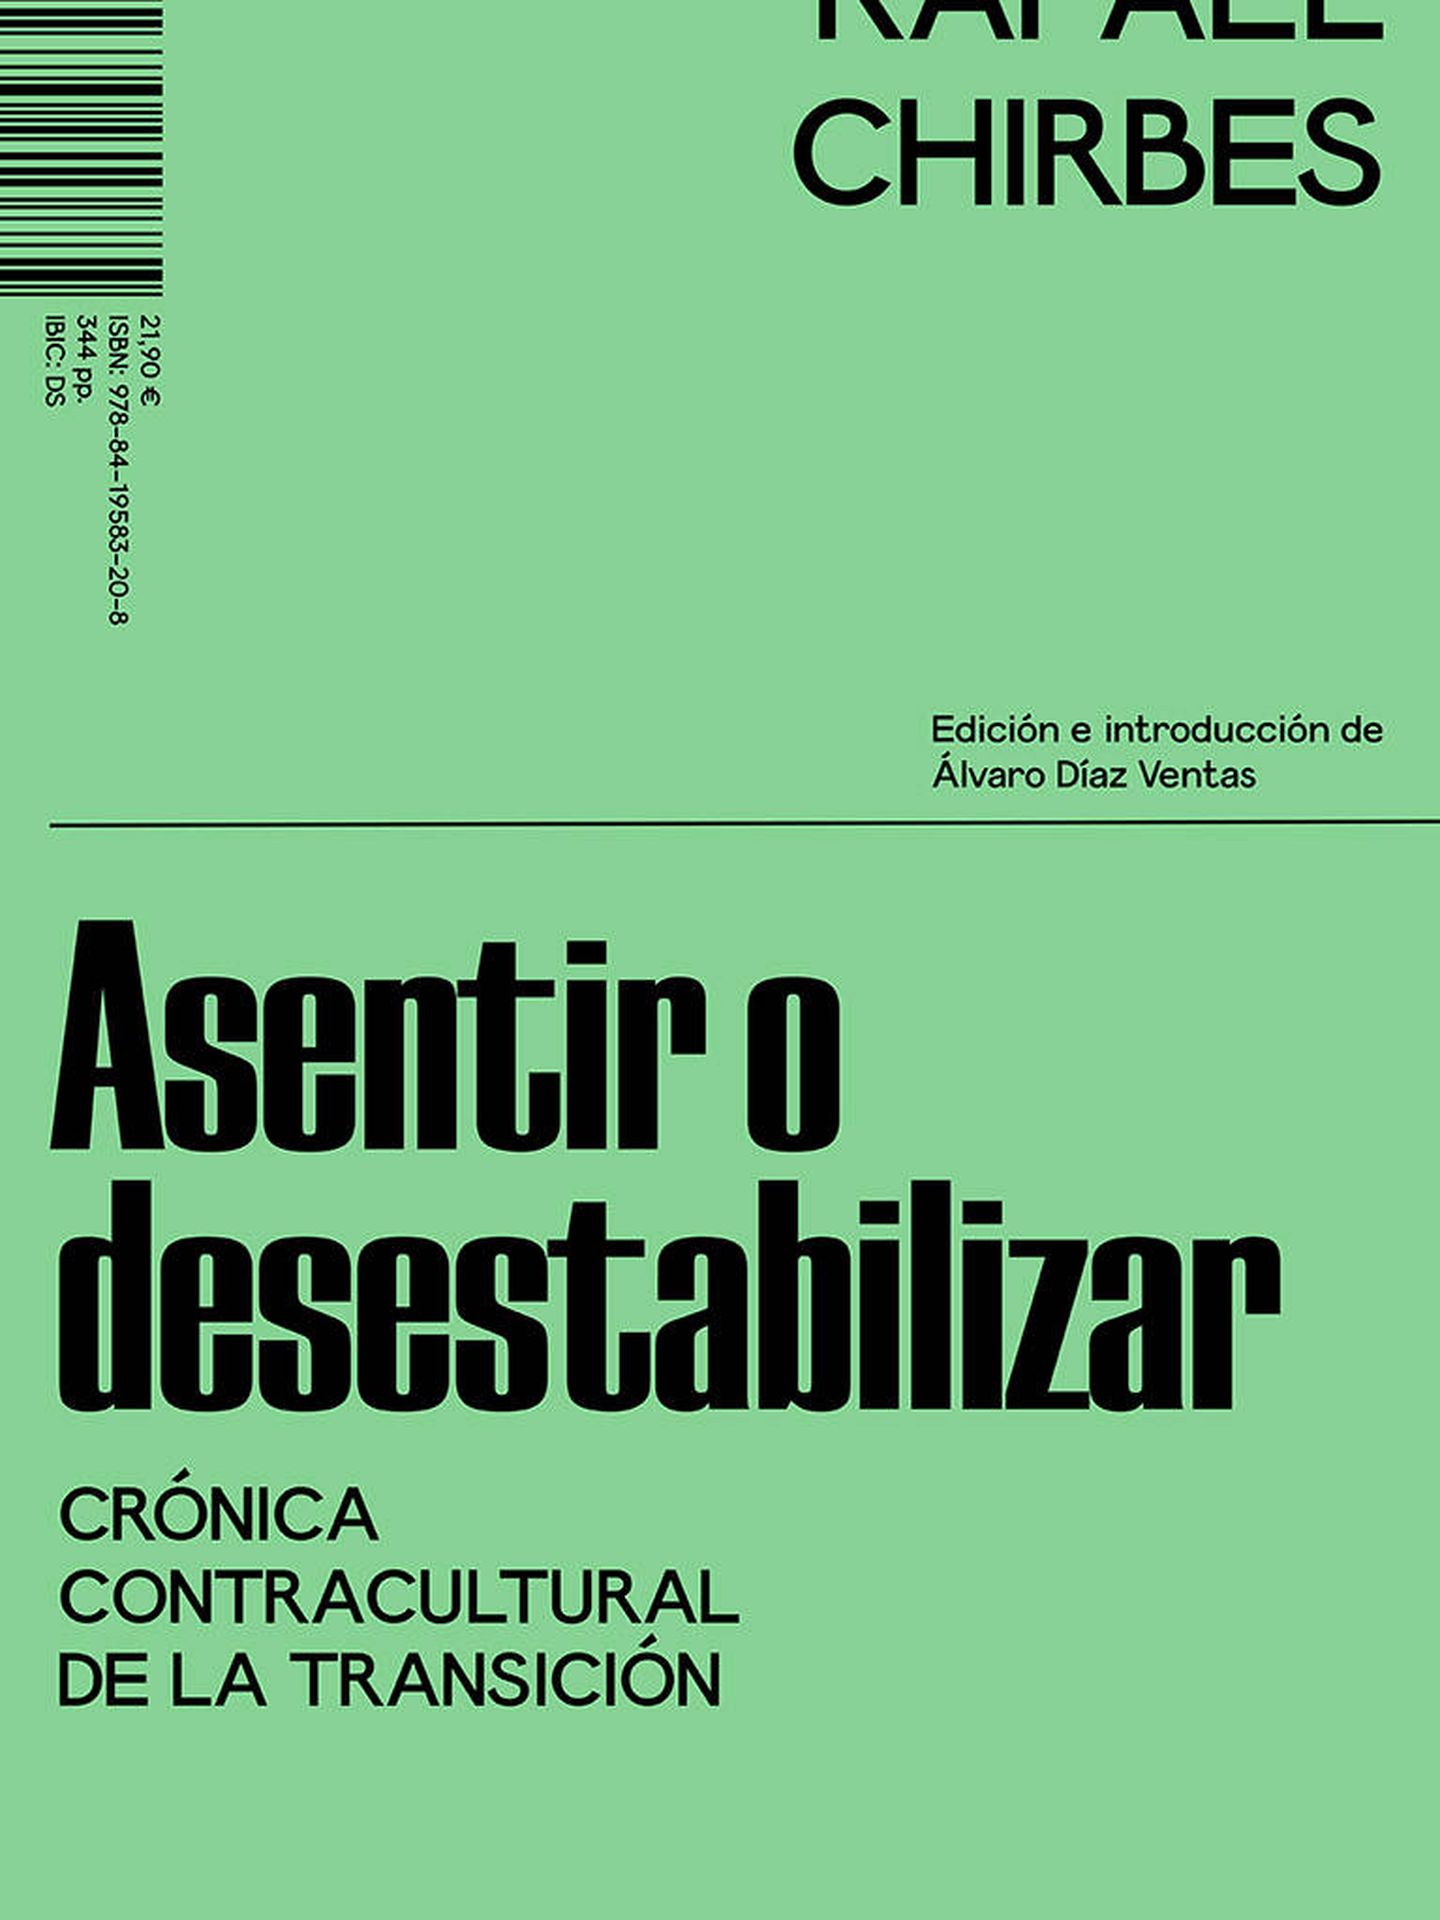 'Asentir o desestabilizar', de Rafael Chirbes (Altamarea)